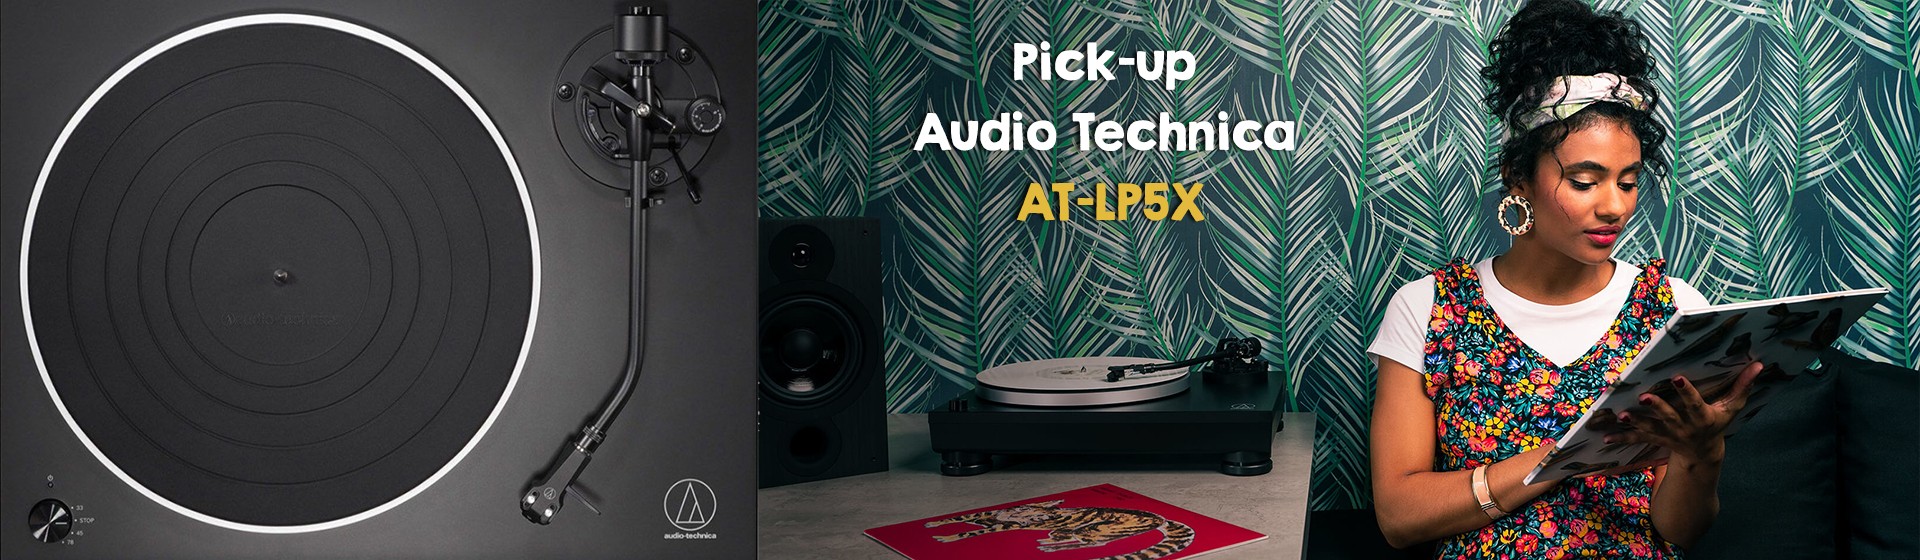 Pick-up Audio Technica AT-LP5X